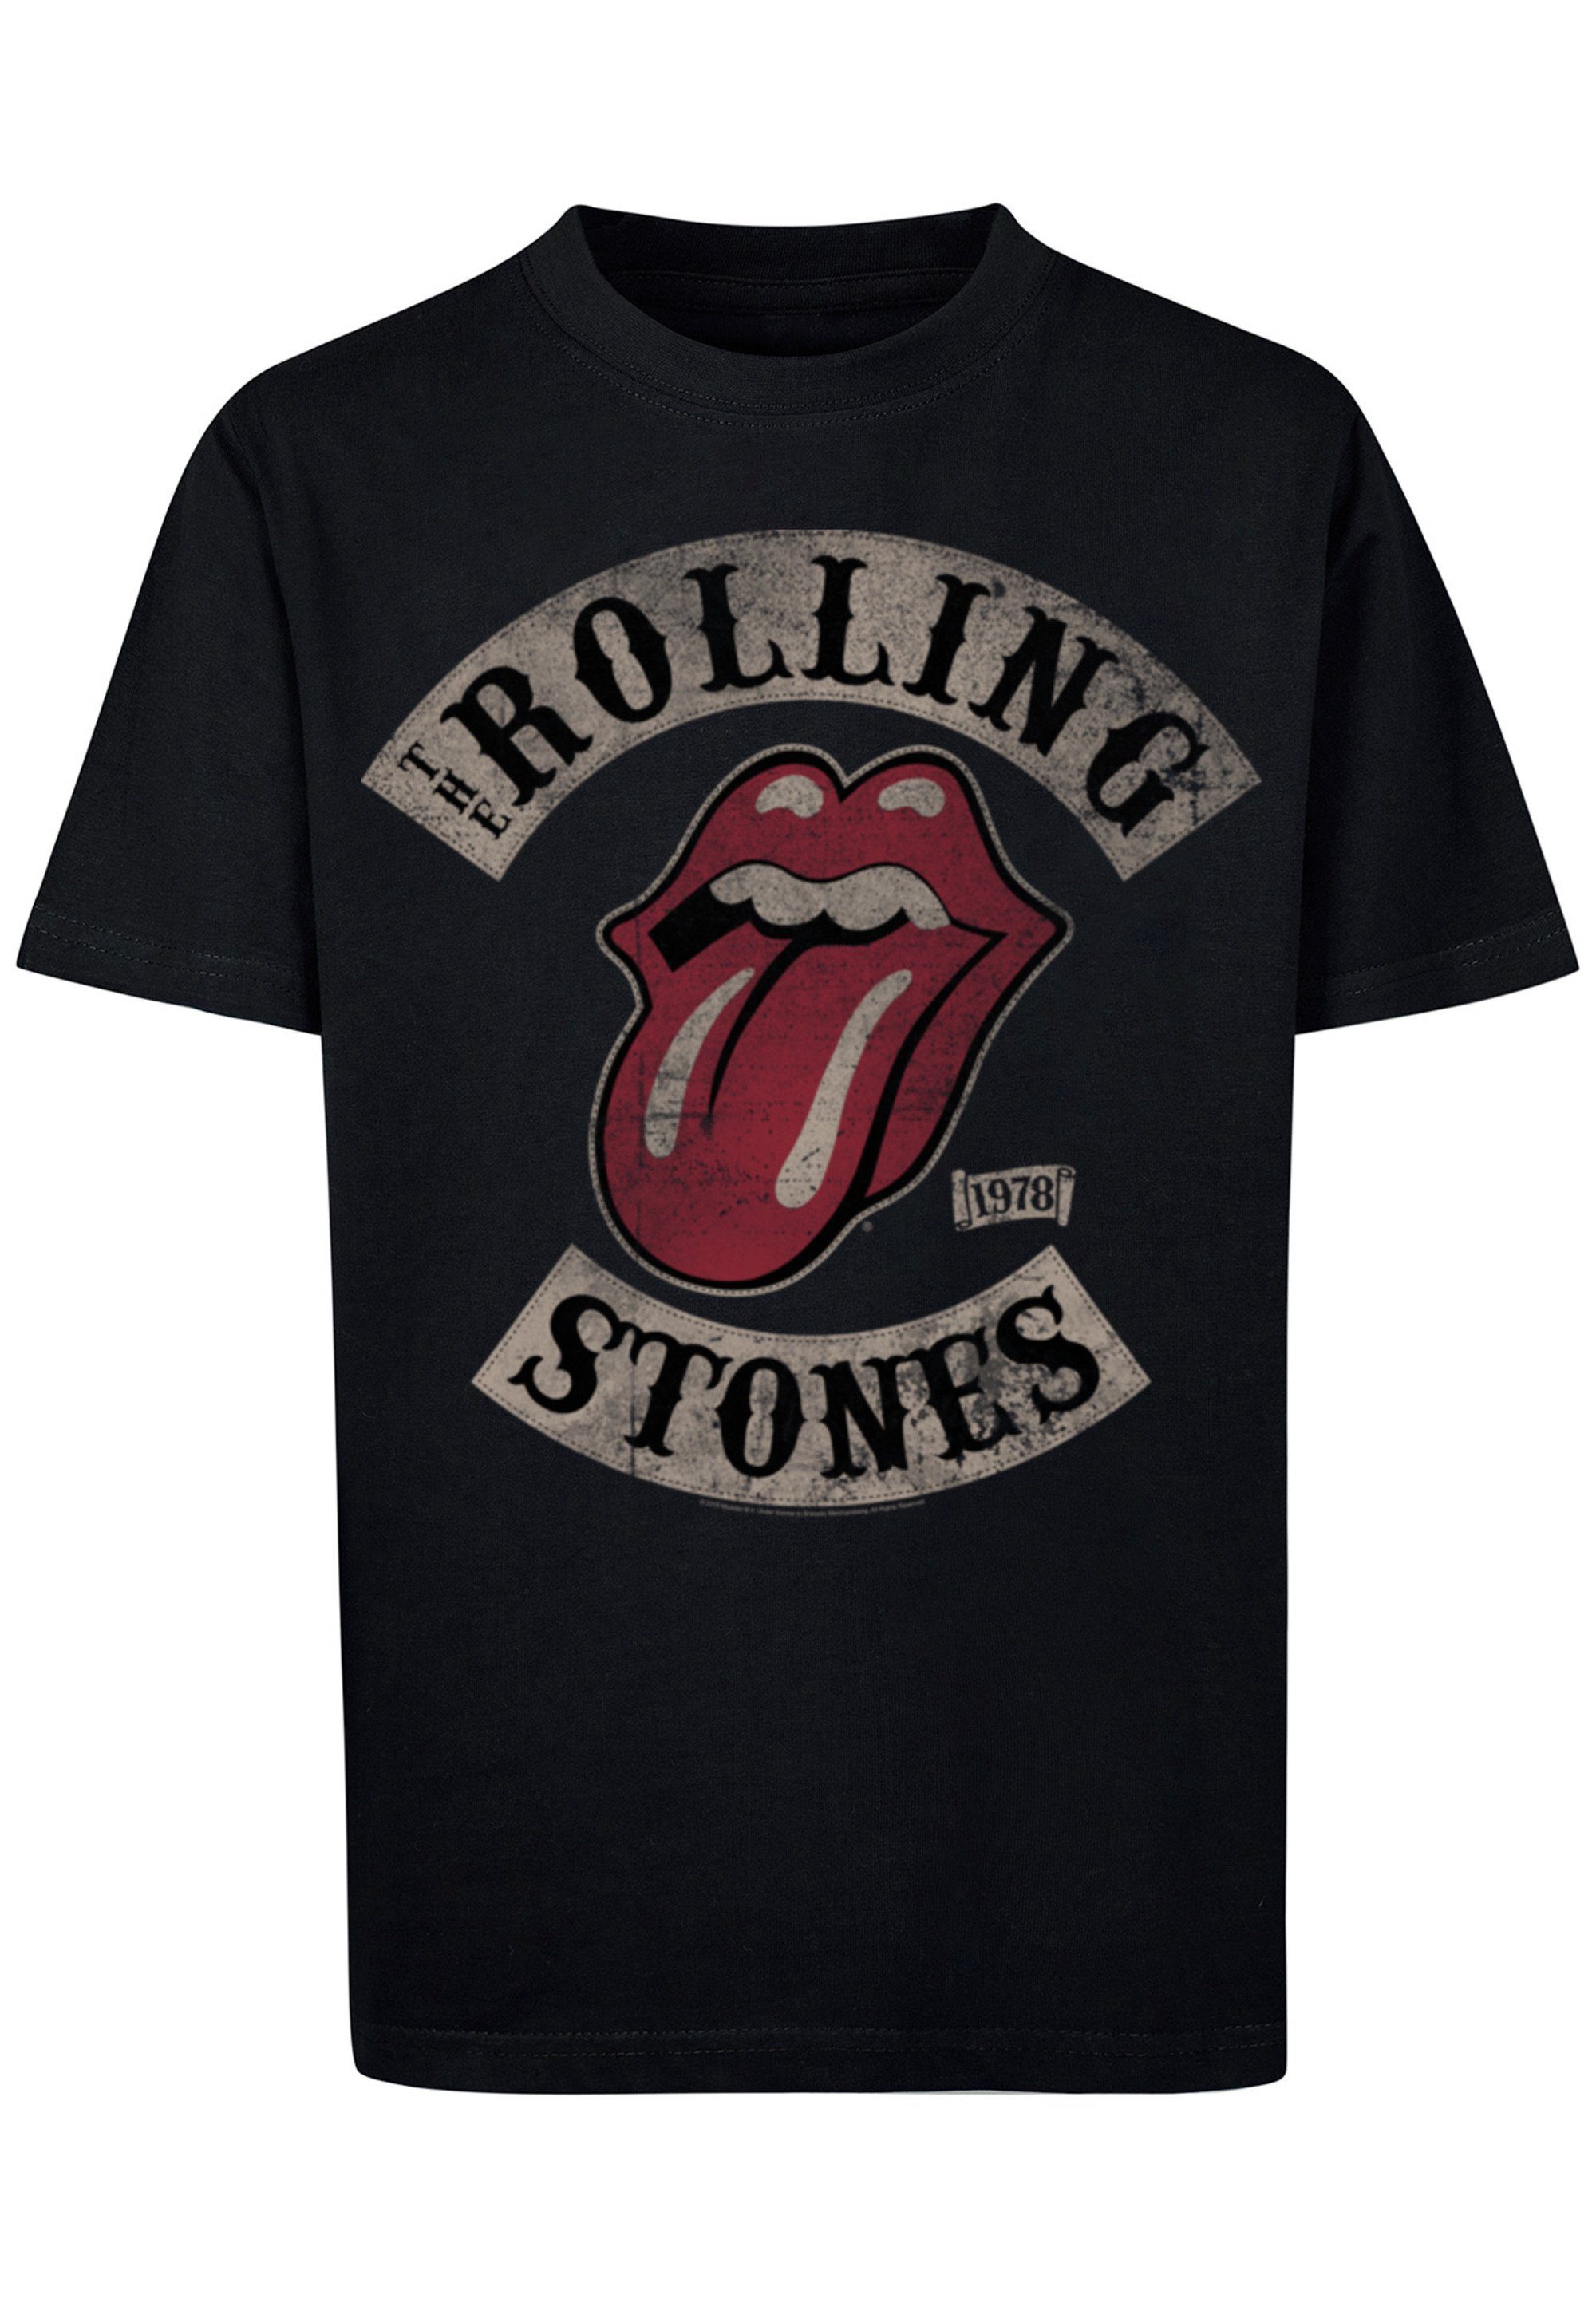 Tour Print Rockband schwarz The T-Shirt '78 Stones Black F4NT4STIC Rolling